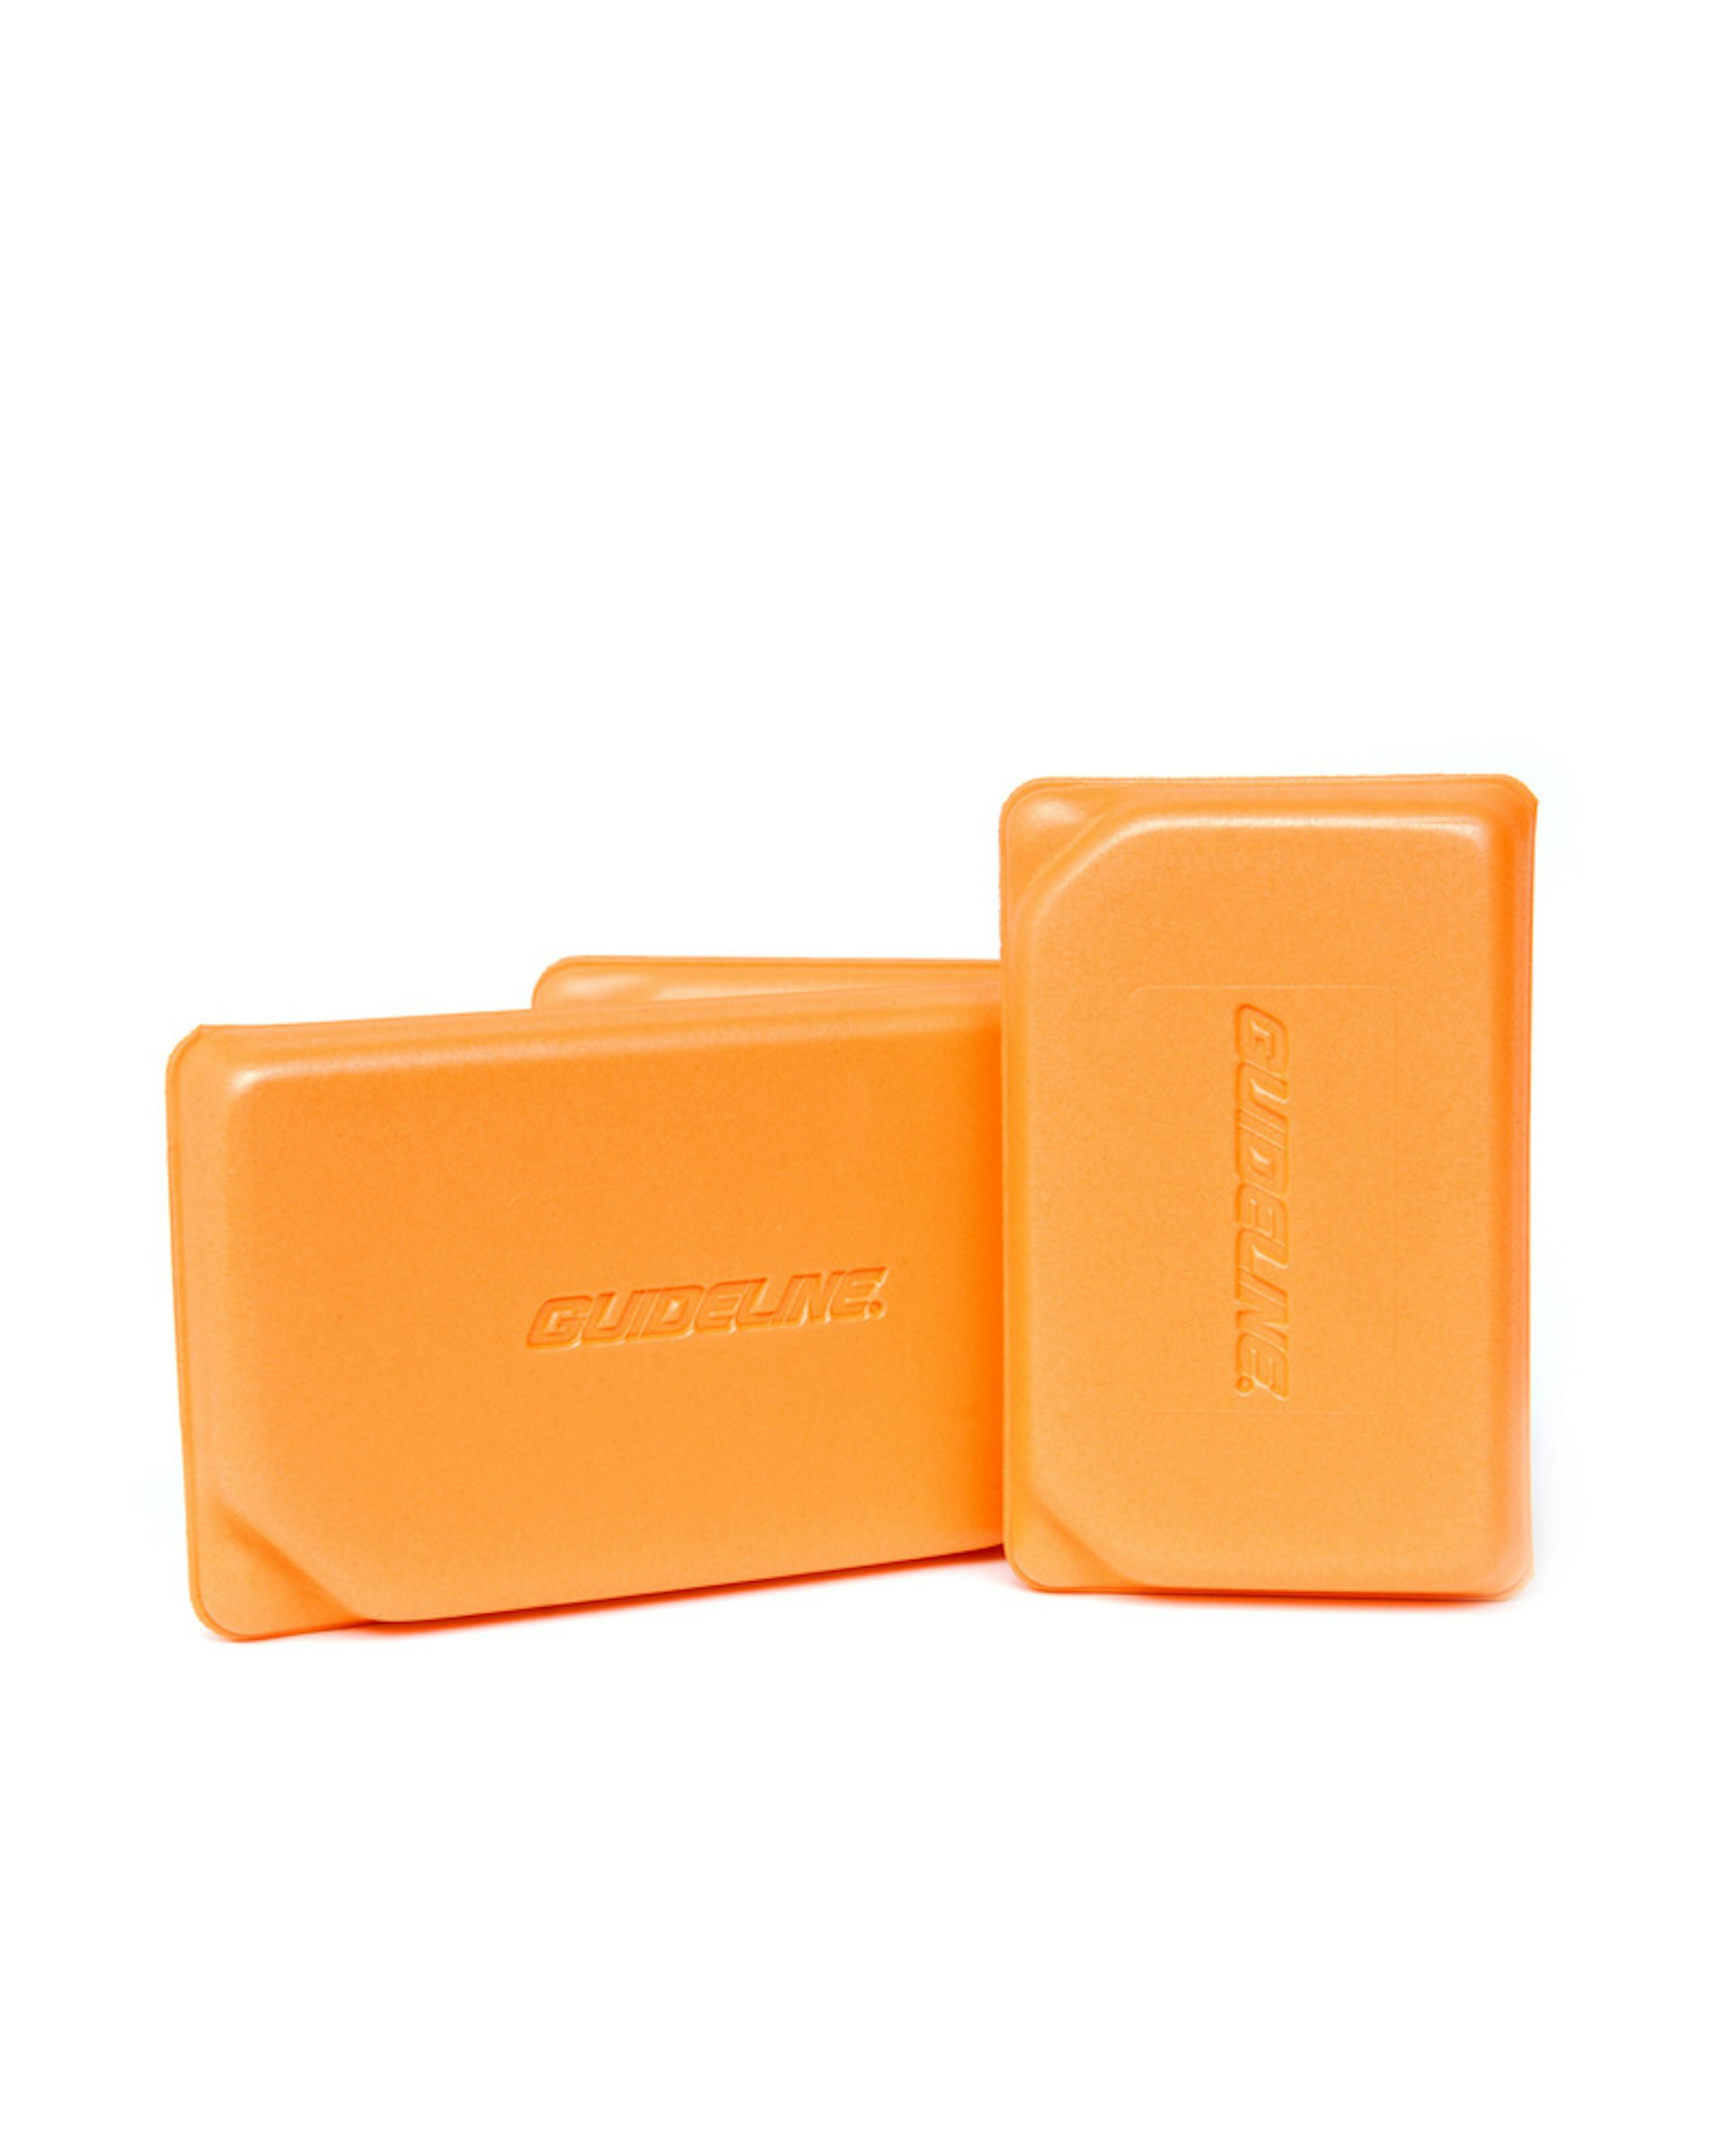 Ultralight Foam Box Orange L (bild 3 av 3)